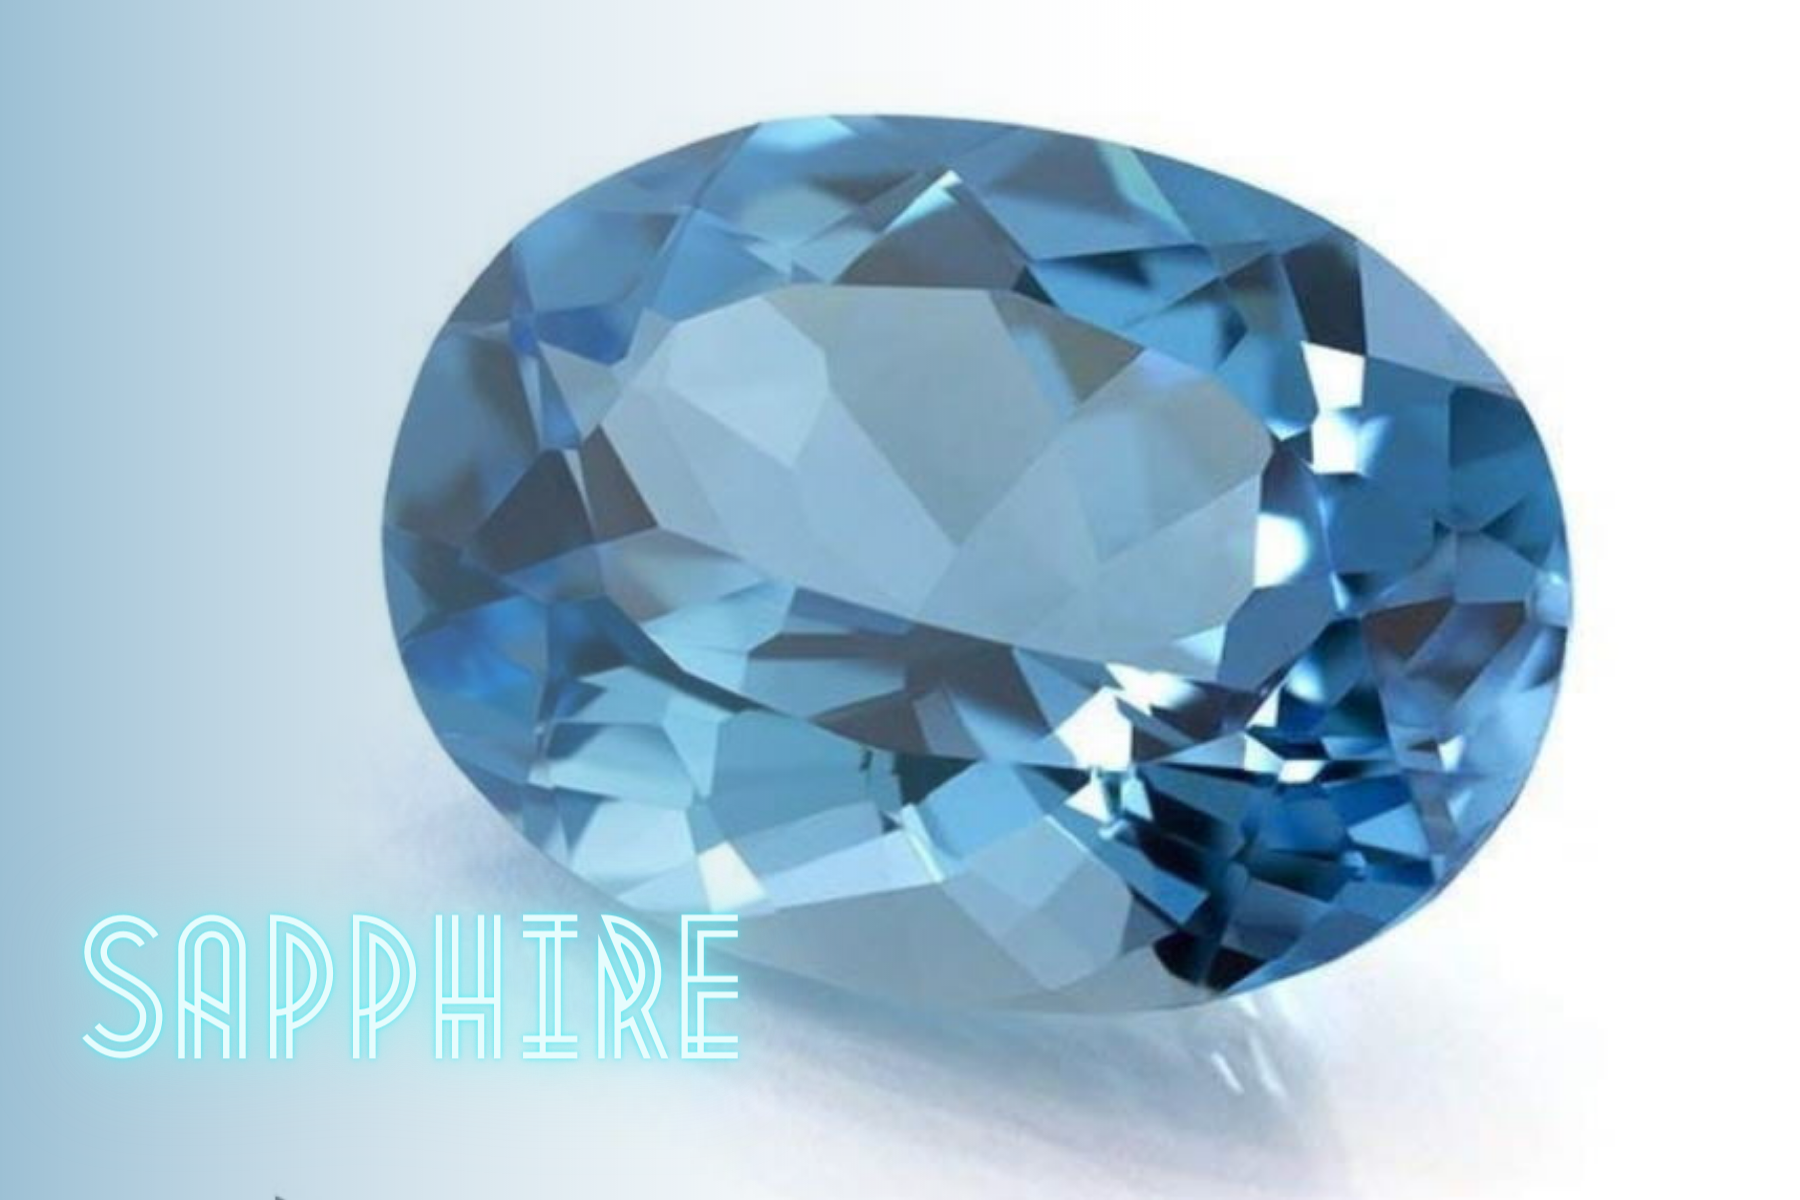 Oblong blue sapphire stone